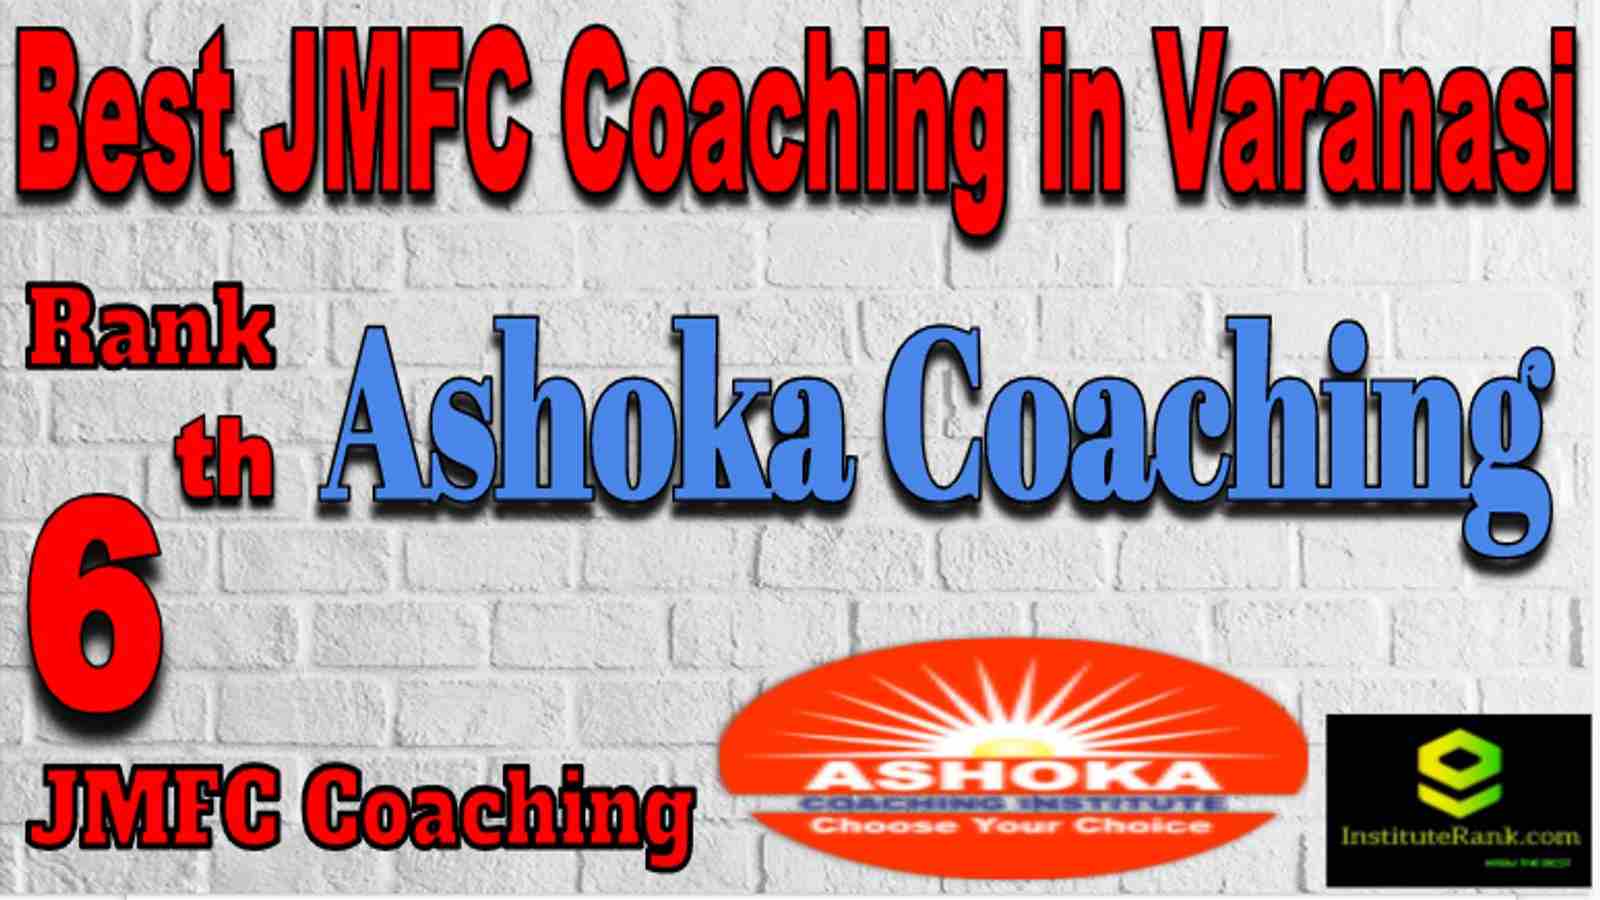 Rank 6 Best JMFC Coaching in Varanasi